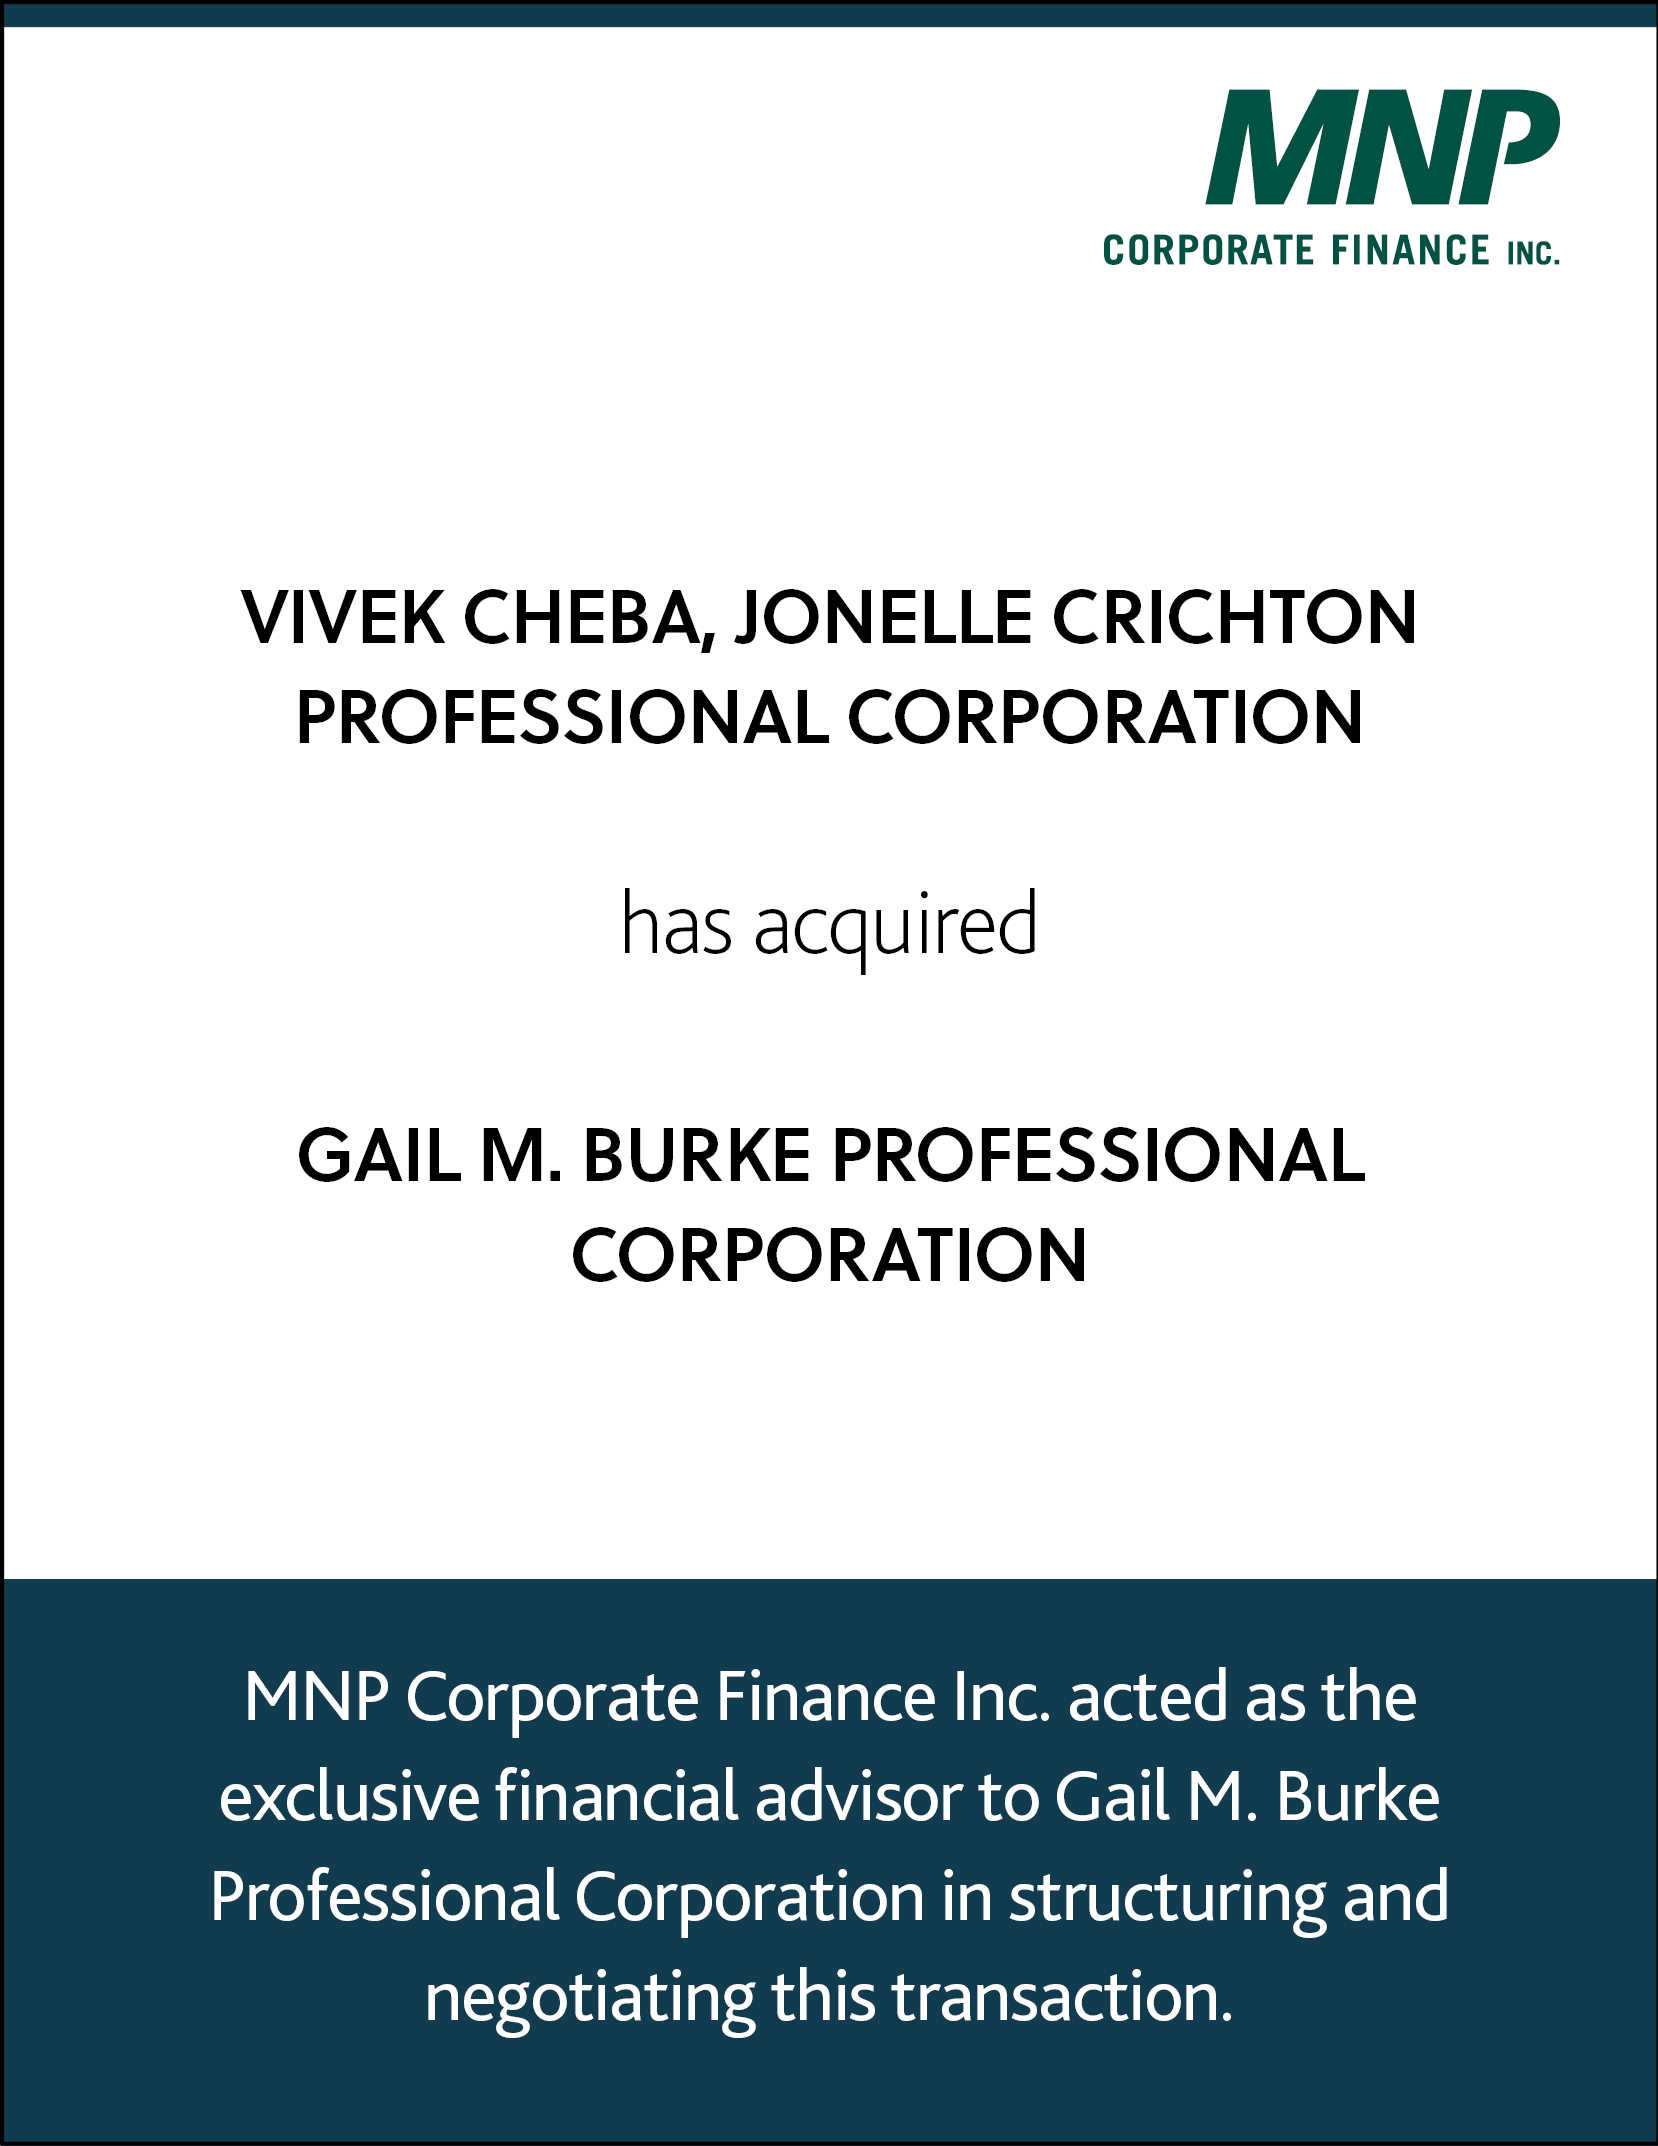 Vivek Cheba, Jonelle Crichton Professional Corporation has acquired Gail M. Burke Professional Corporation